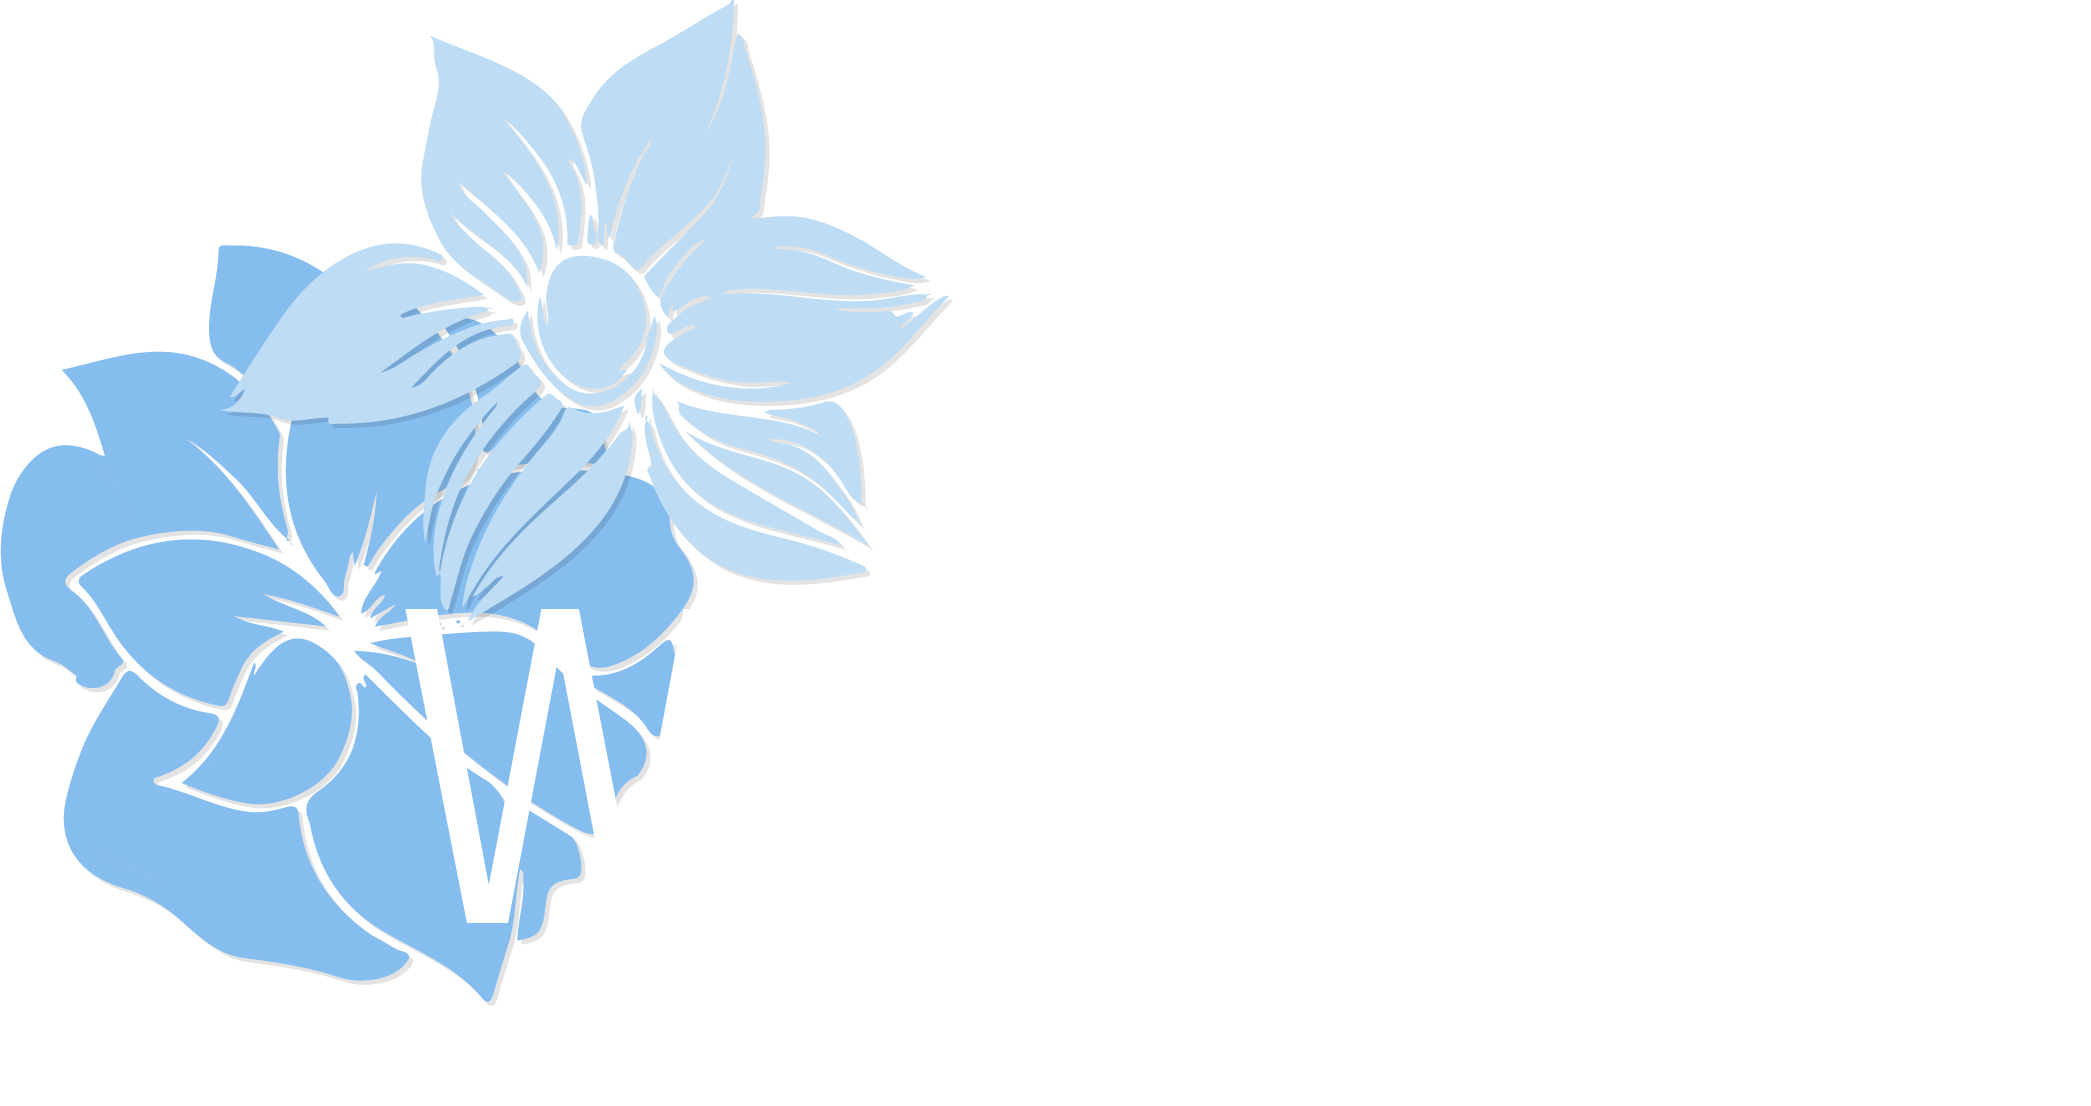 Town of Watertown